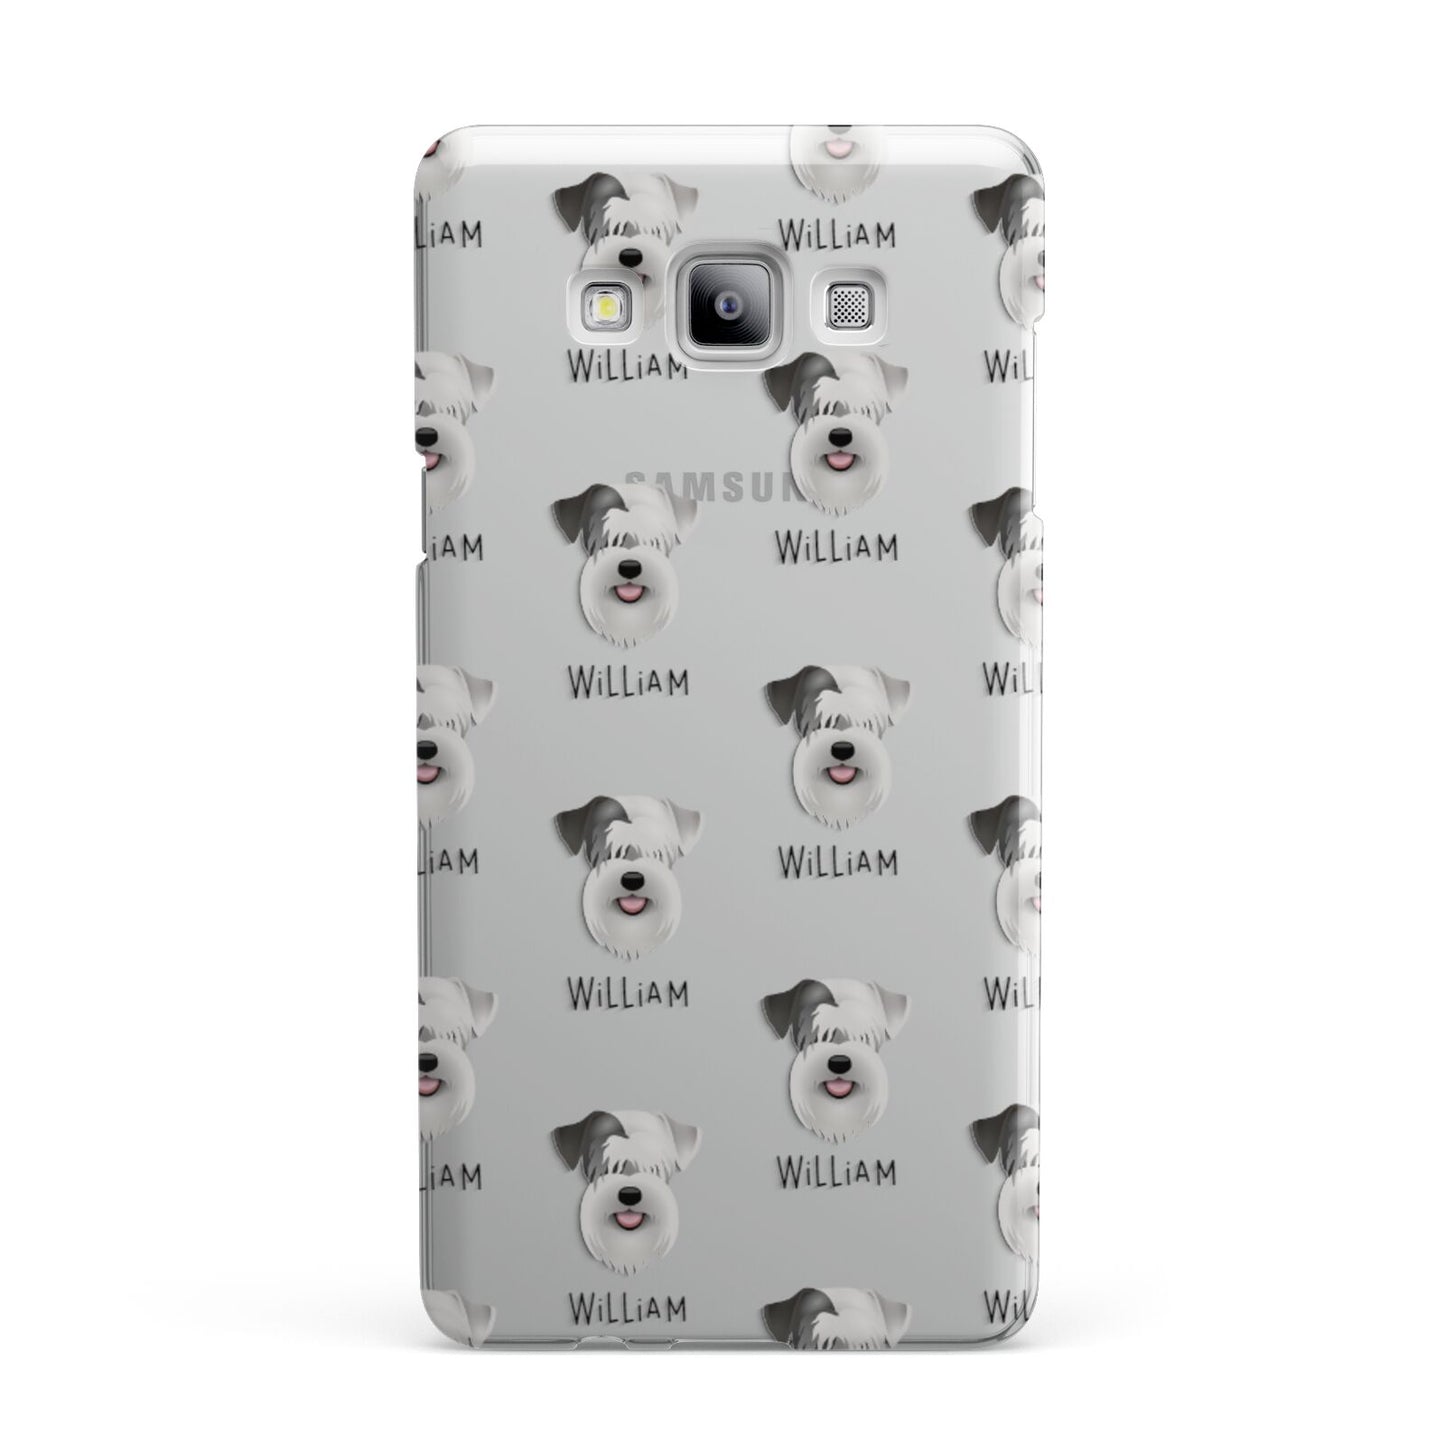 Sealyham Terrier Icon with Name Samsung Galaxy A7 2015 Case